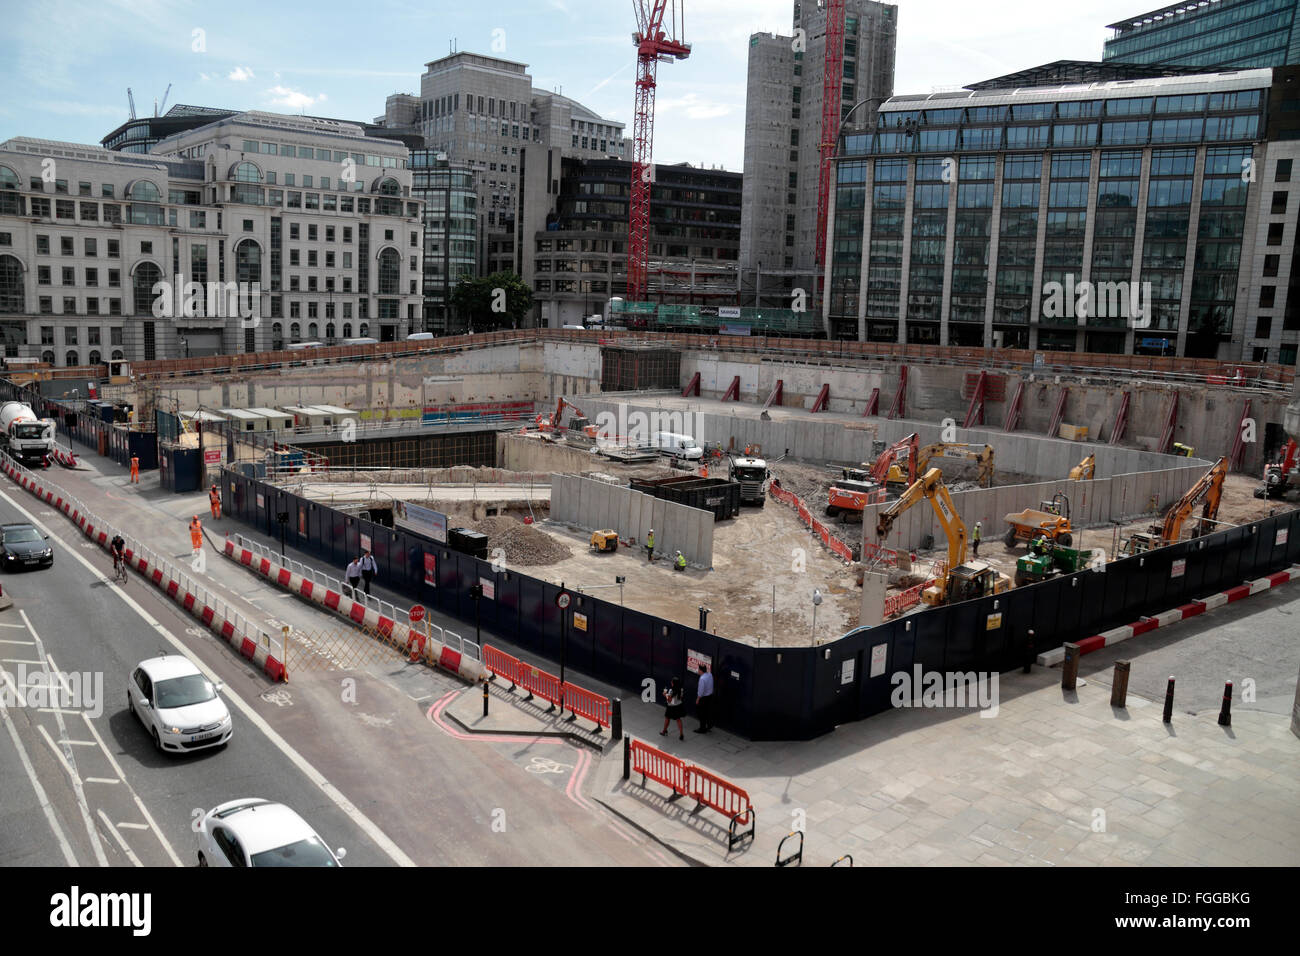 Construction site on Farringdon Street (Goldman Sachs bank's new European headquarters) in the City of London, UK. Stock Photo